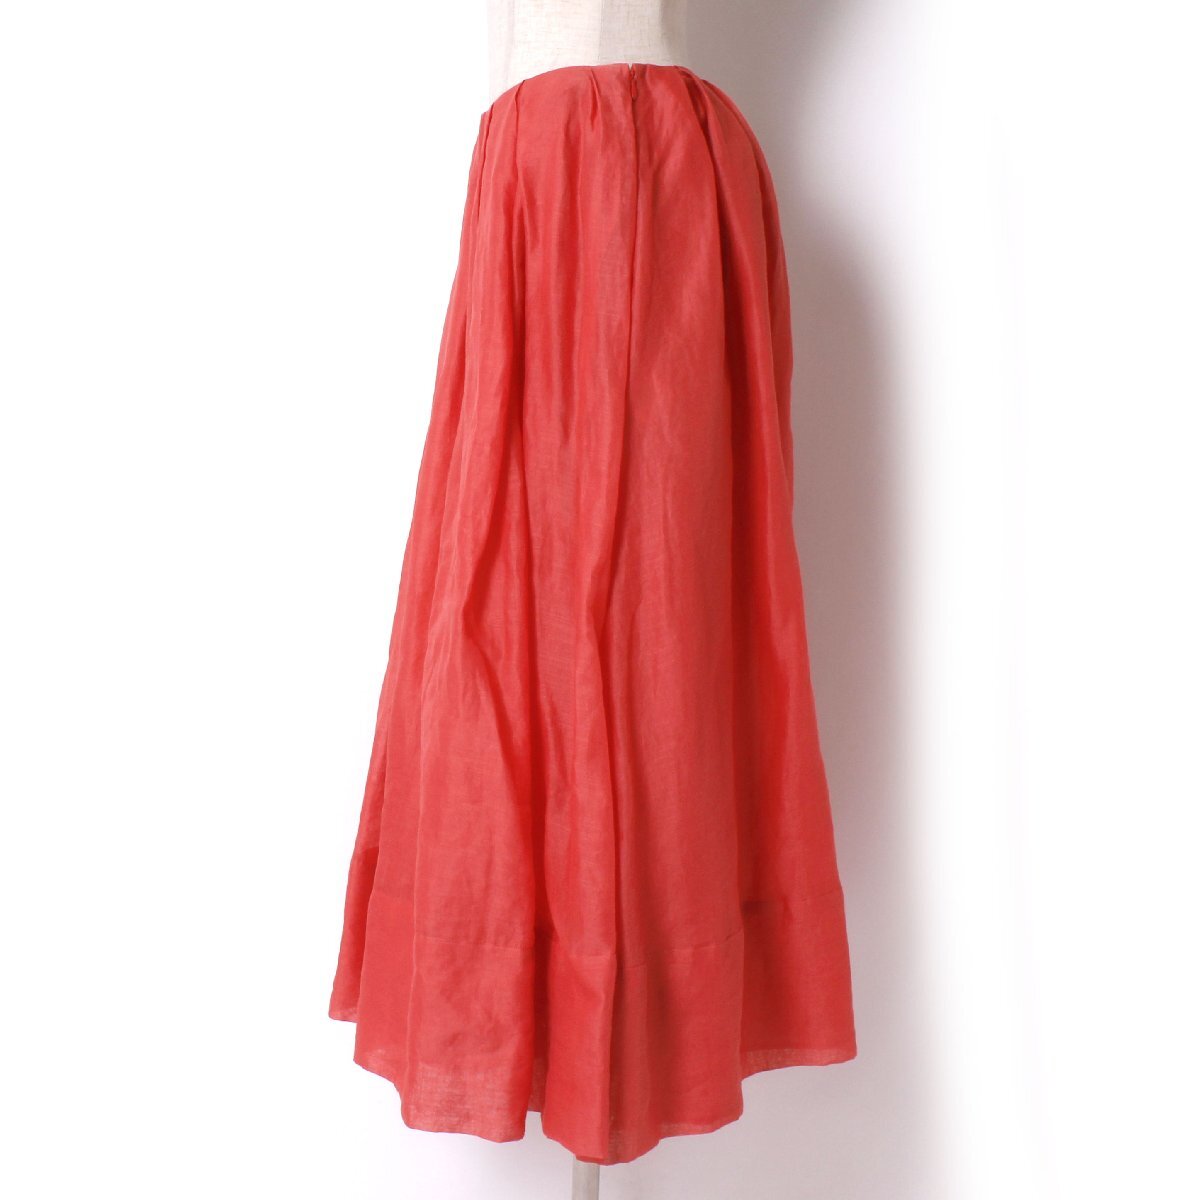 KEITA MARUYAMA Boyle юбка size1 красный AI1-1921509JC Keita Maruyama юбка 